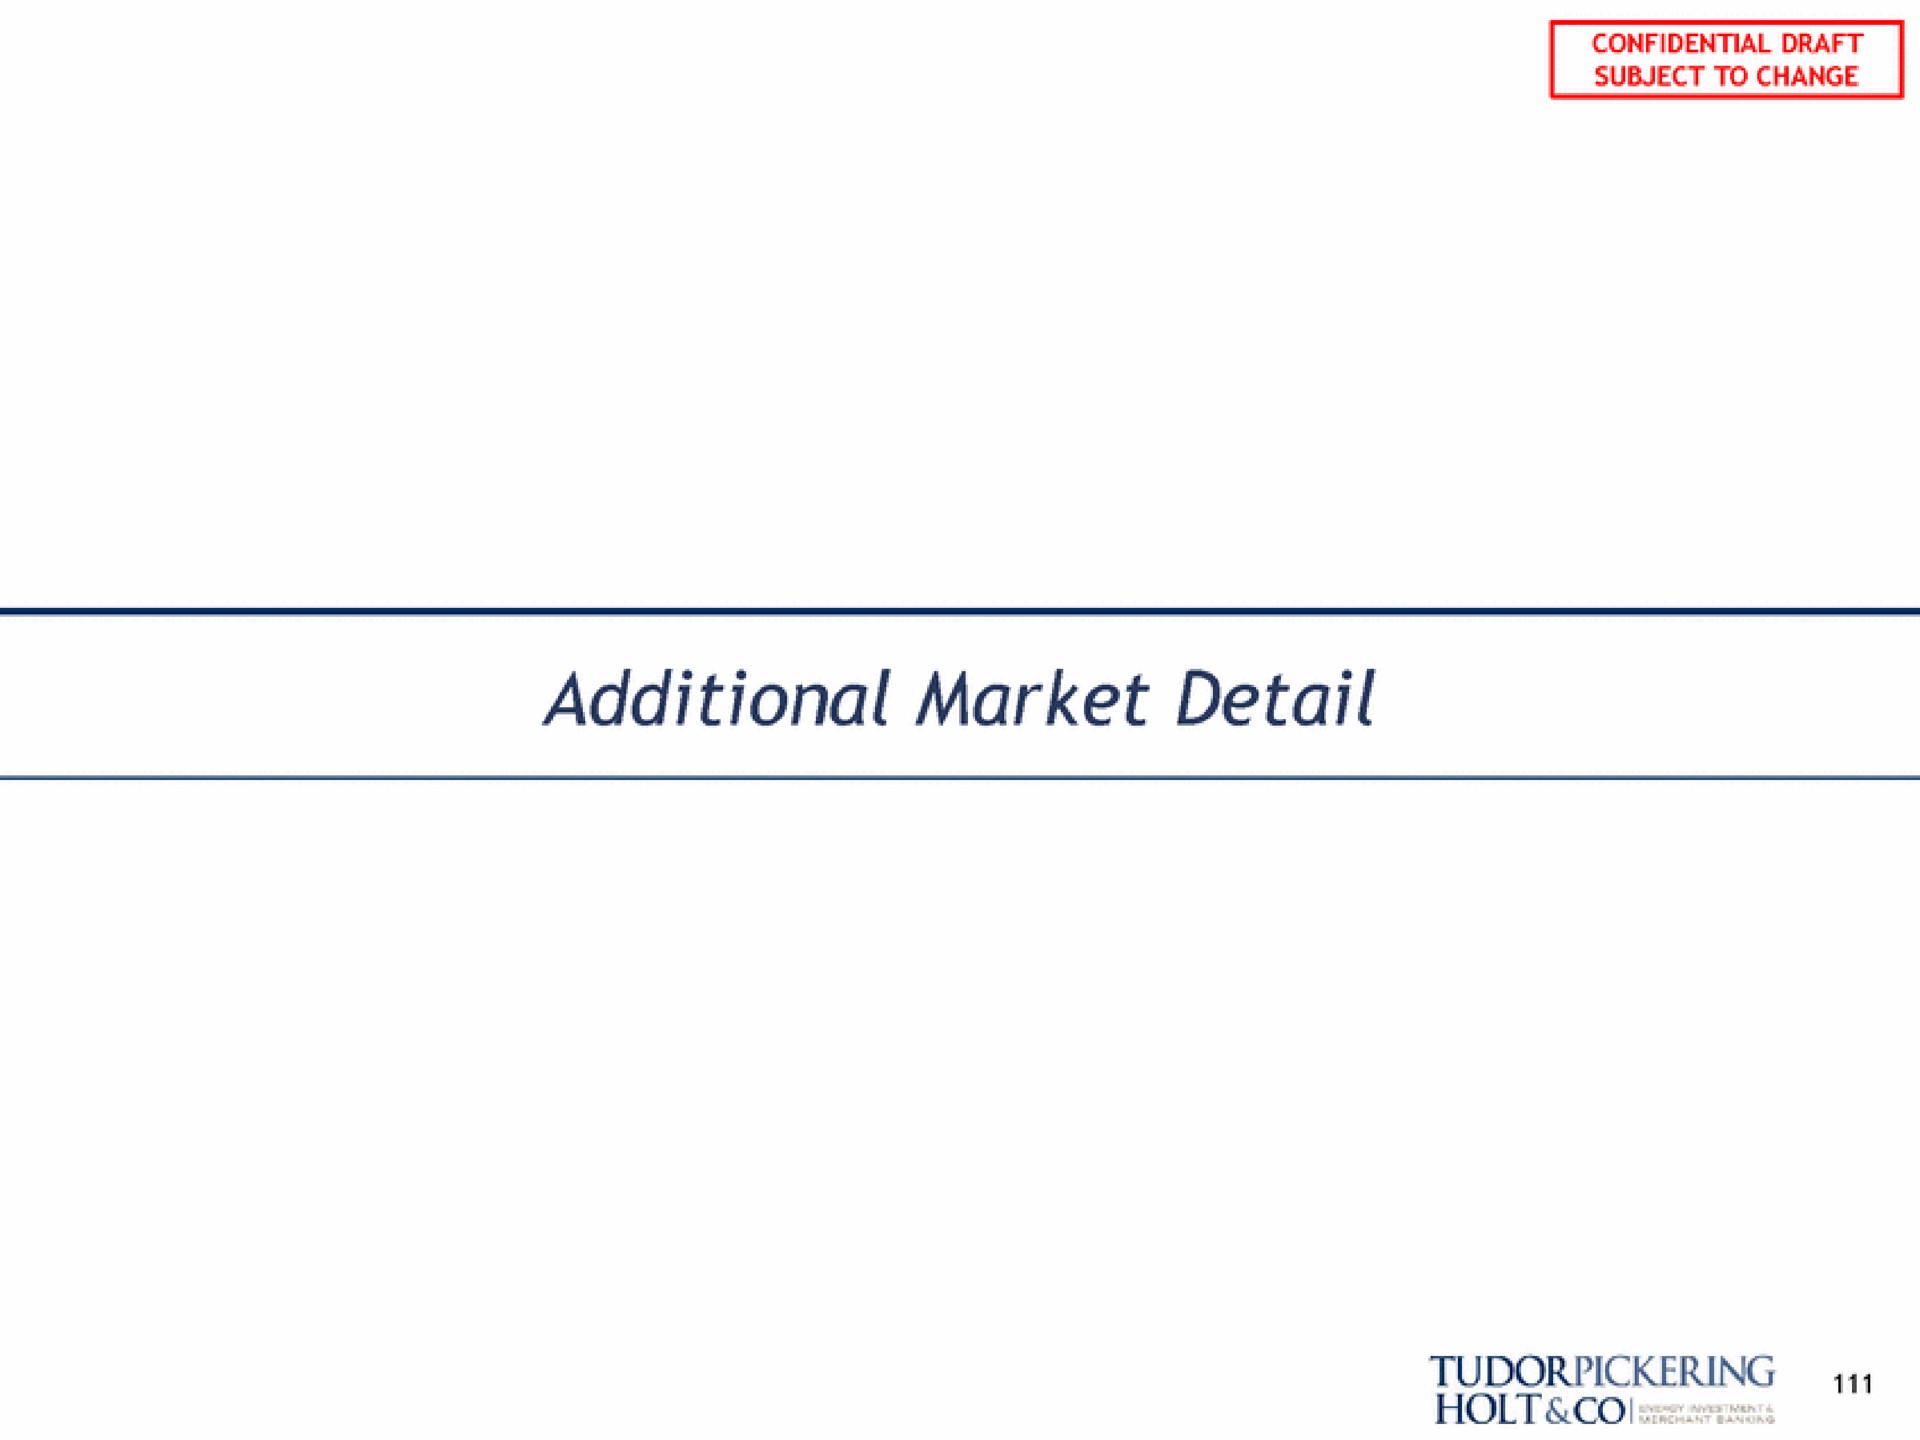 additional market detail | Tudor, Pickering, Holt & Co